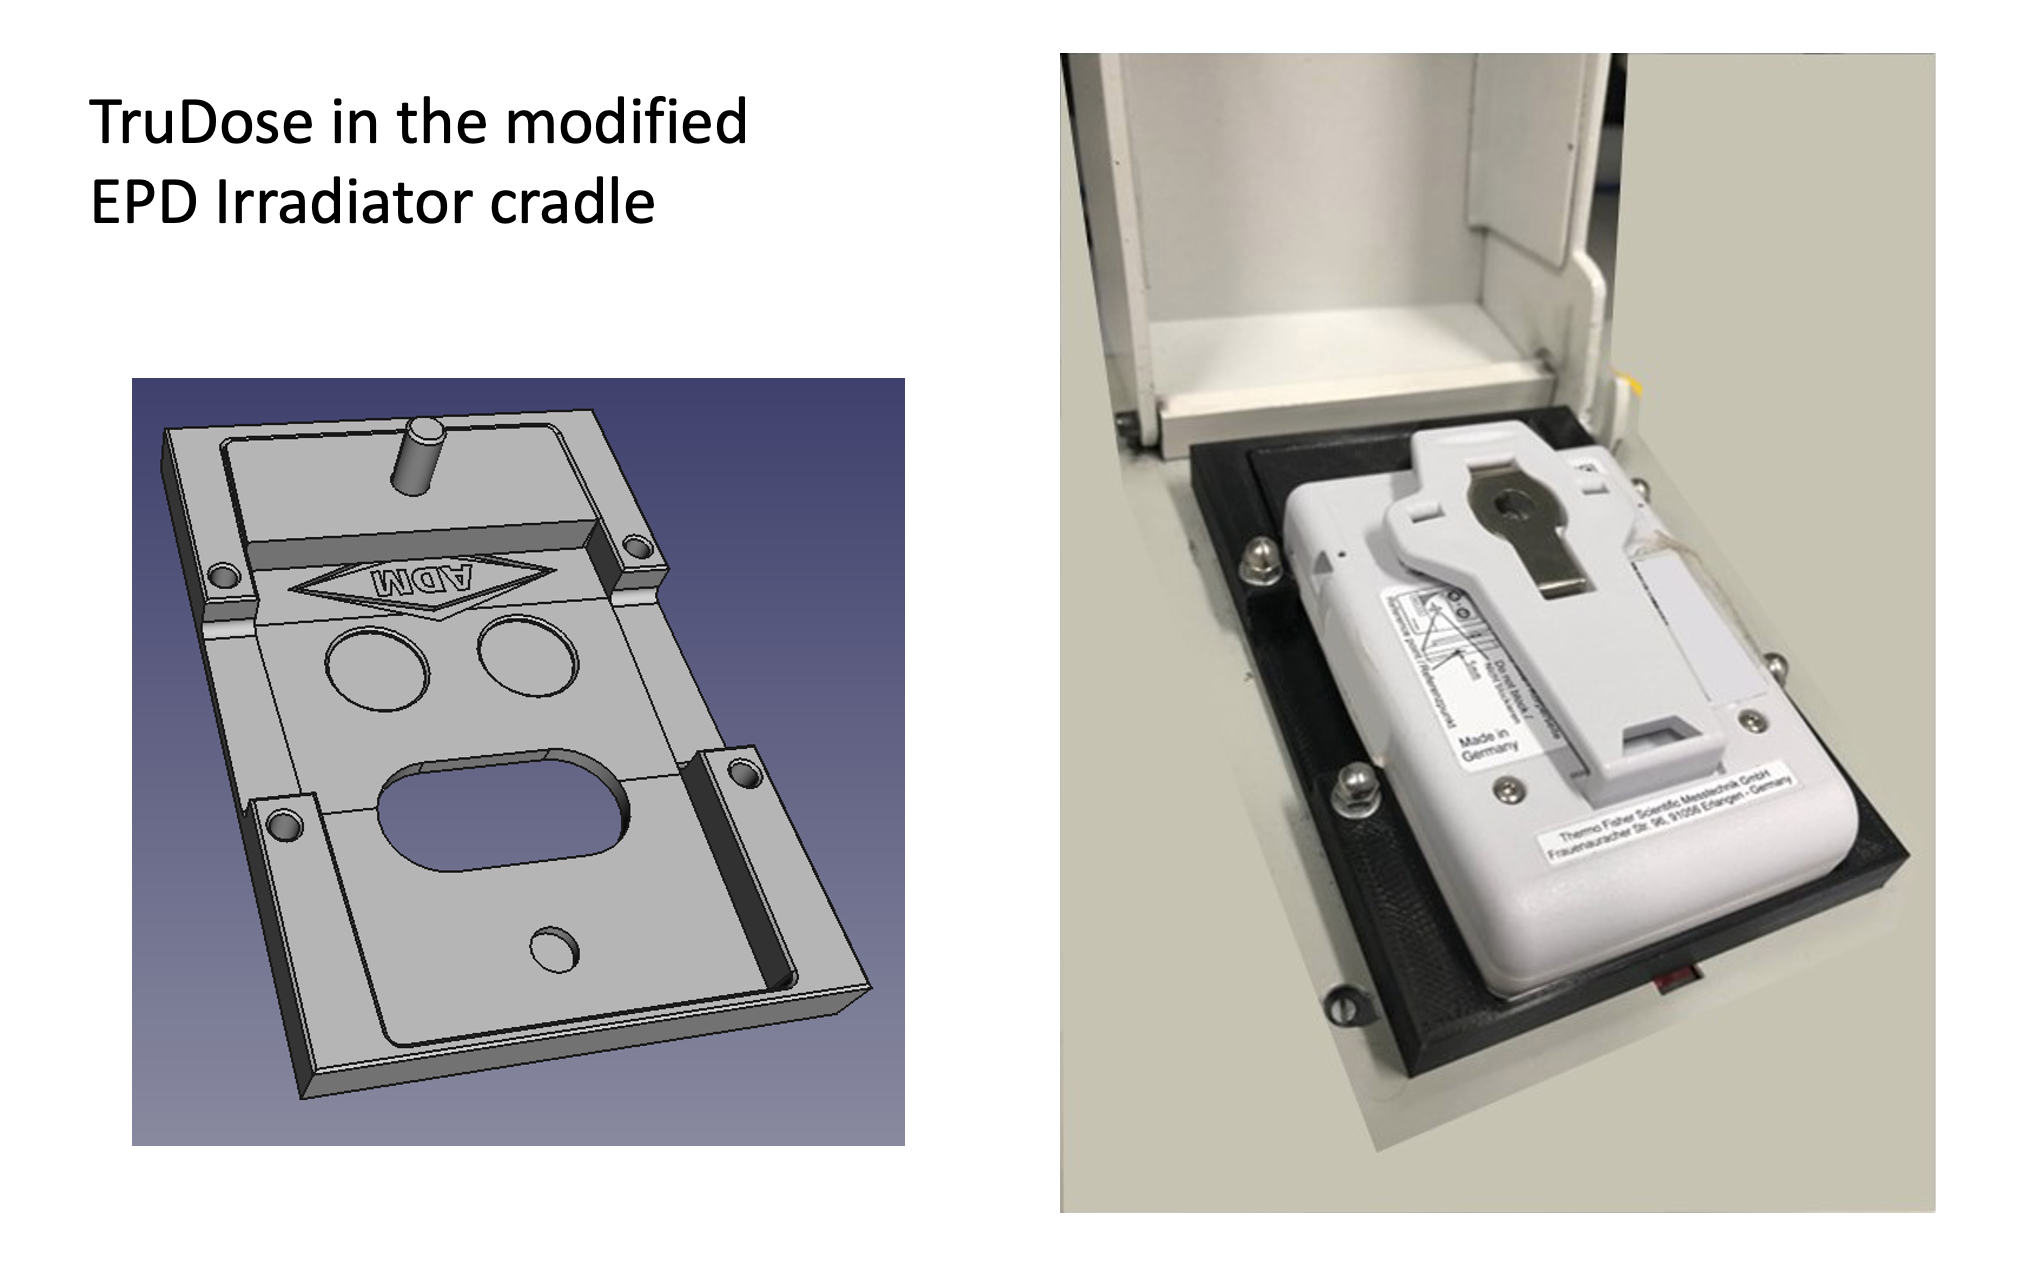 modified irradiator cradle for TruDose